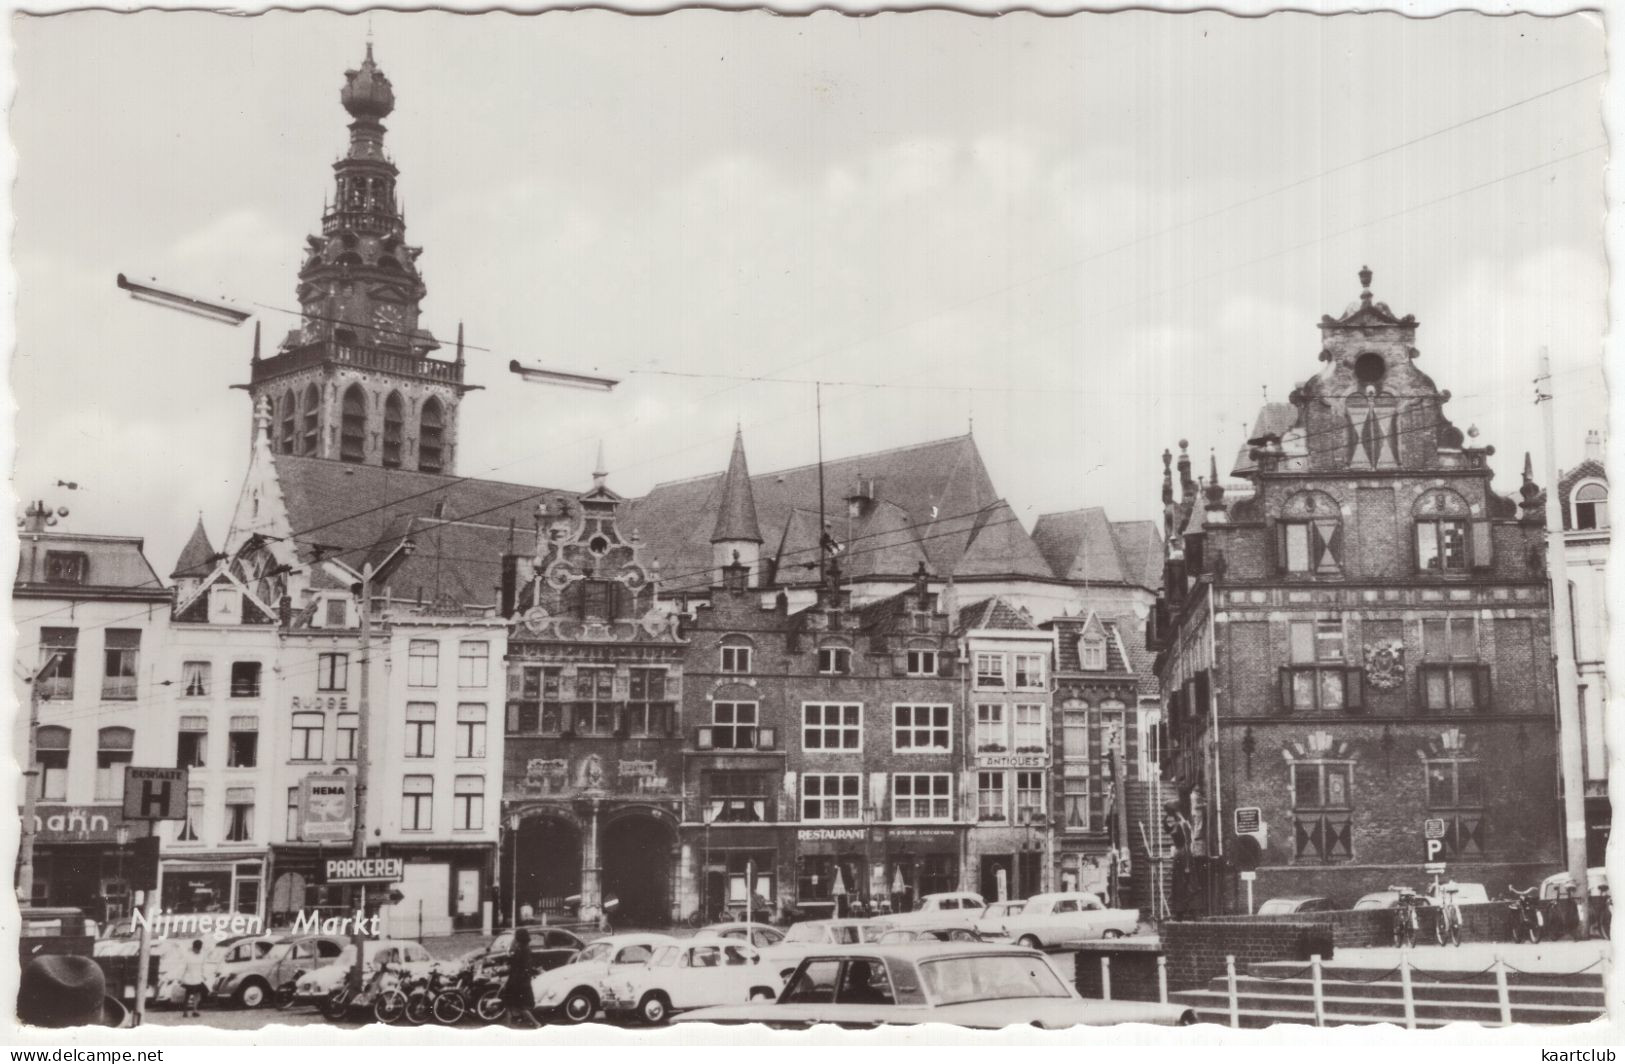 Nijmegen: FORD FAIRLANE '54, TAUNUS P2, FIAT 600, VW 1200 KÄFER/COX, CITROËN 2CV, SOLEX - Markt - (Holland) - Toerisme